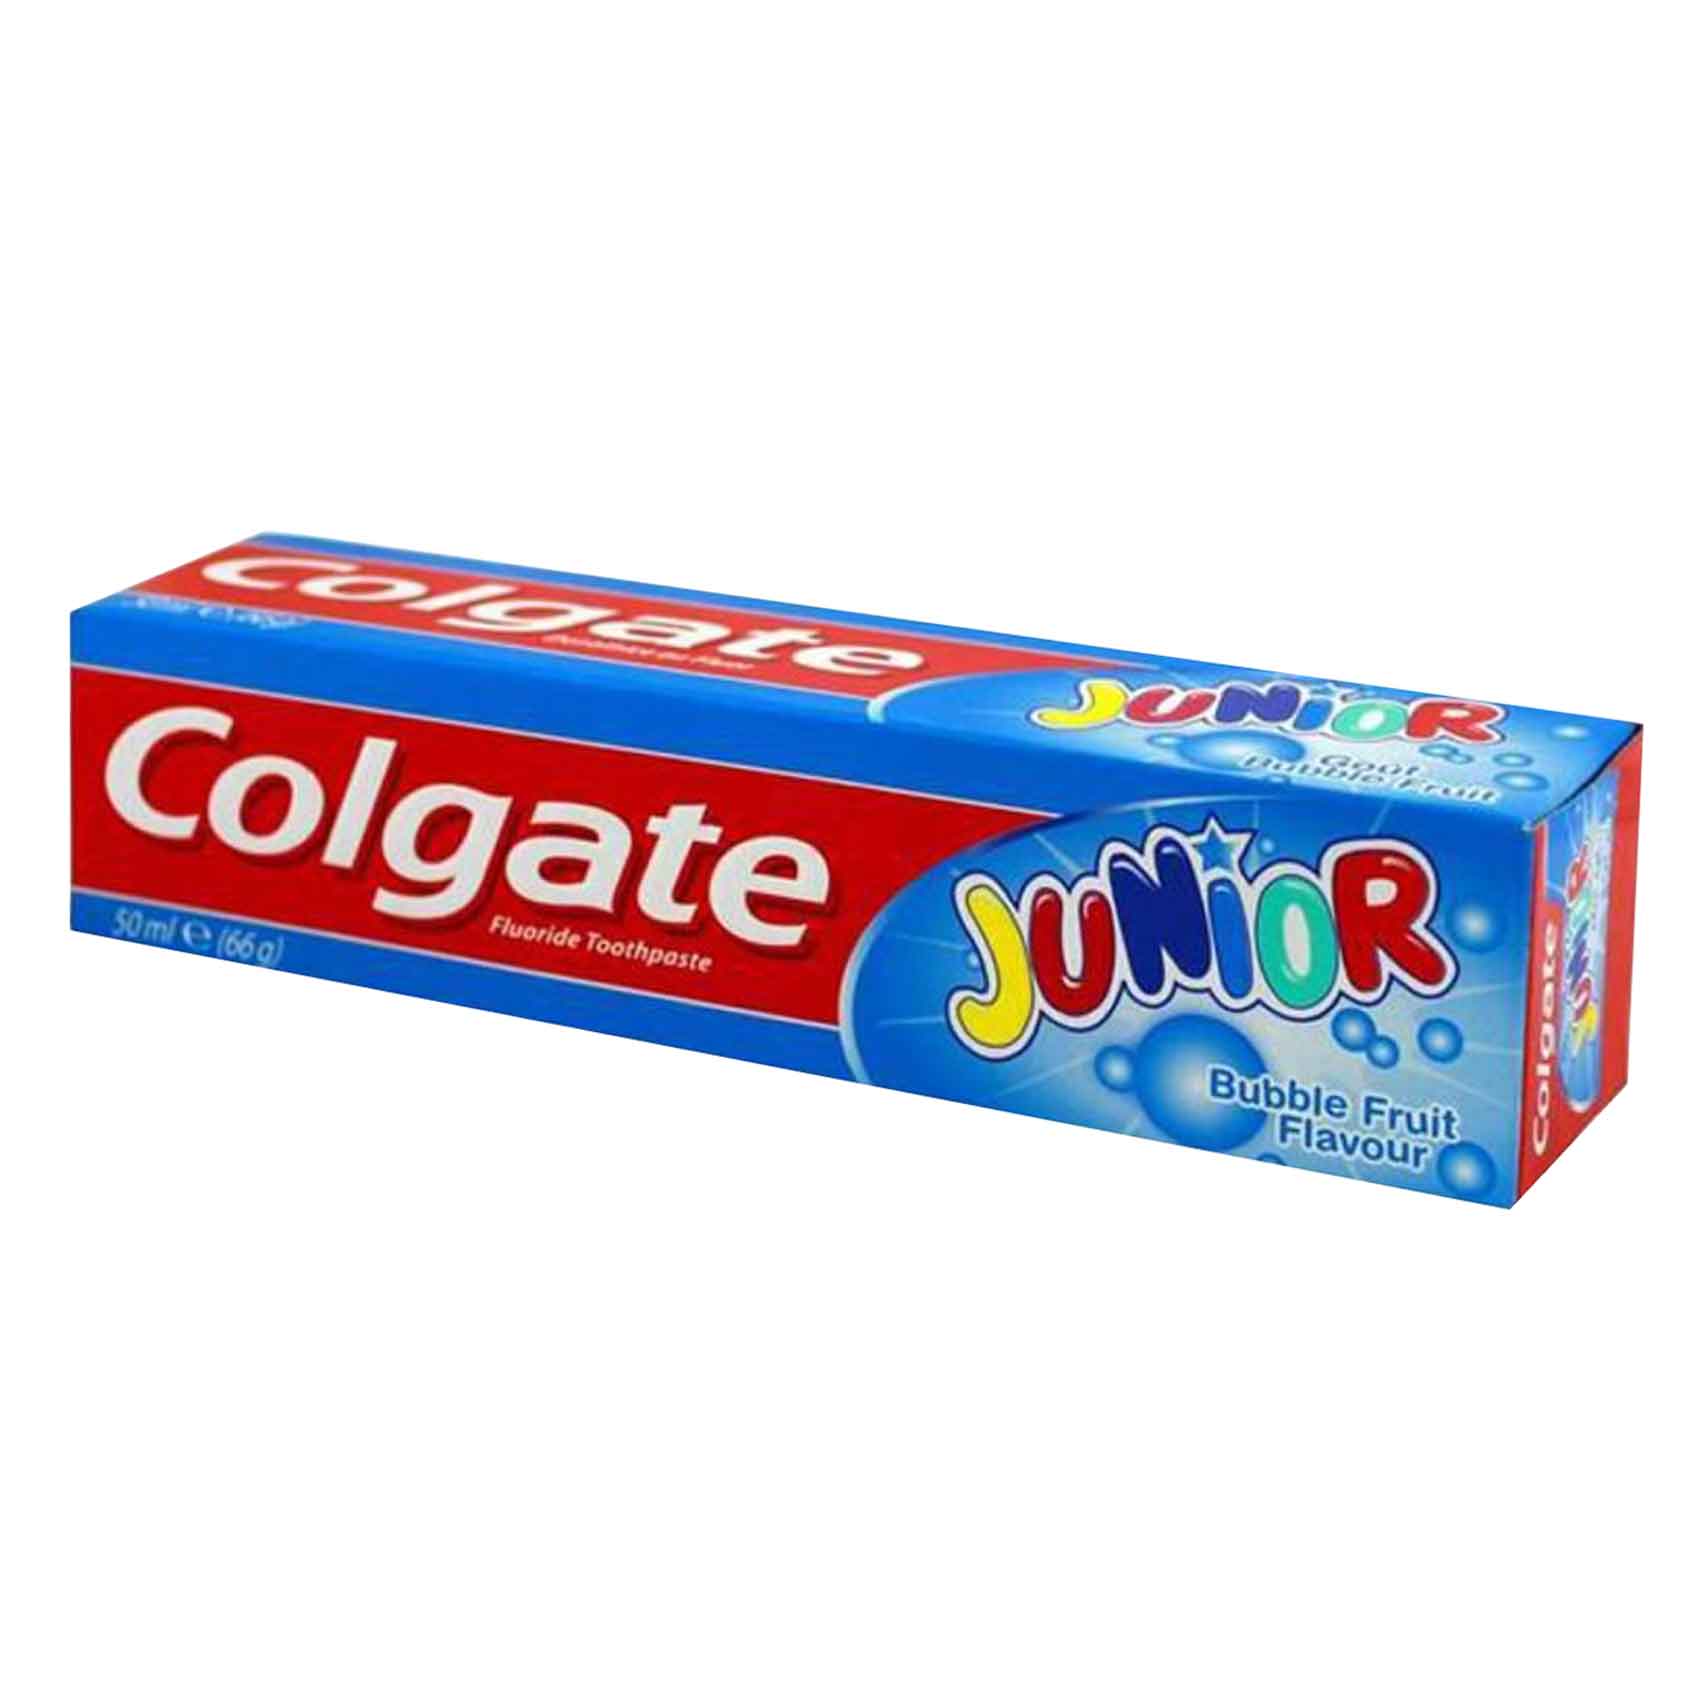 Colgate Junior Bubble Fruit Flouride Toothpaste 50ml 20% Off